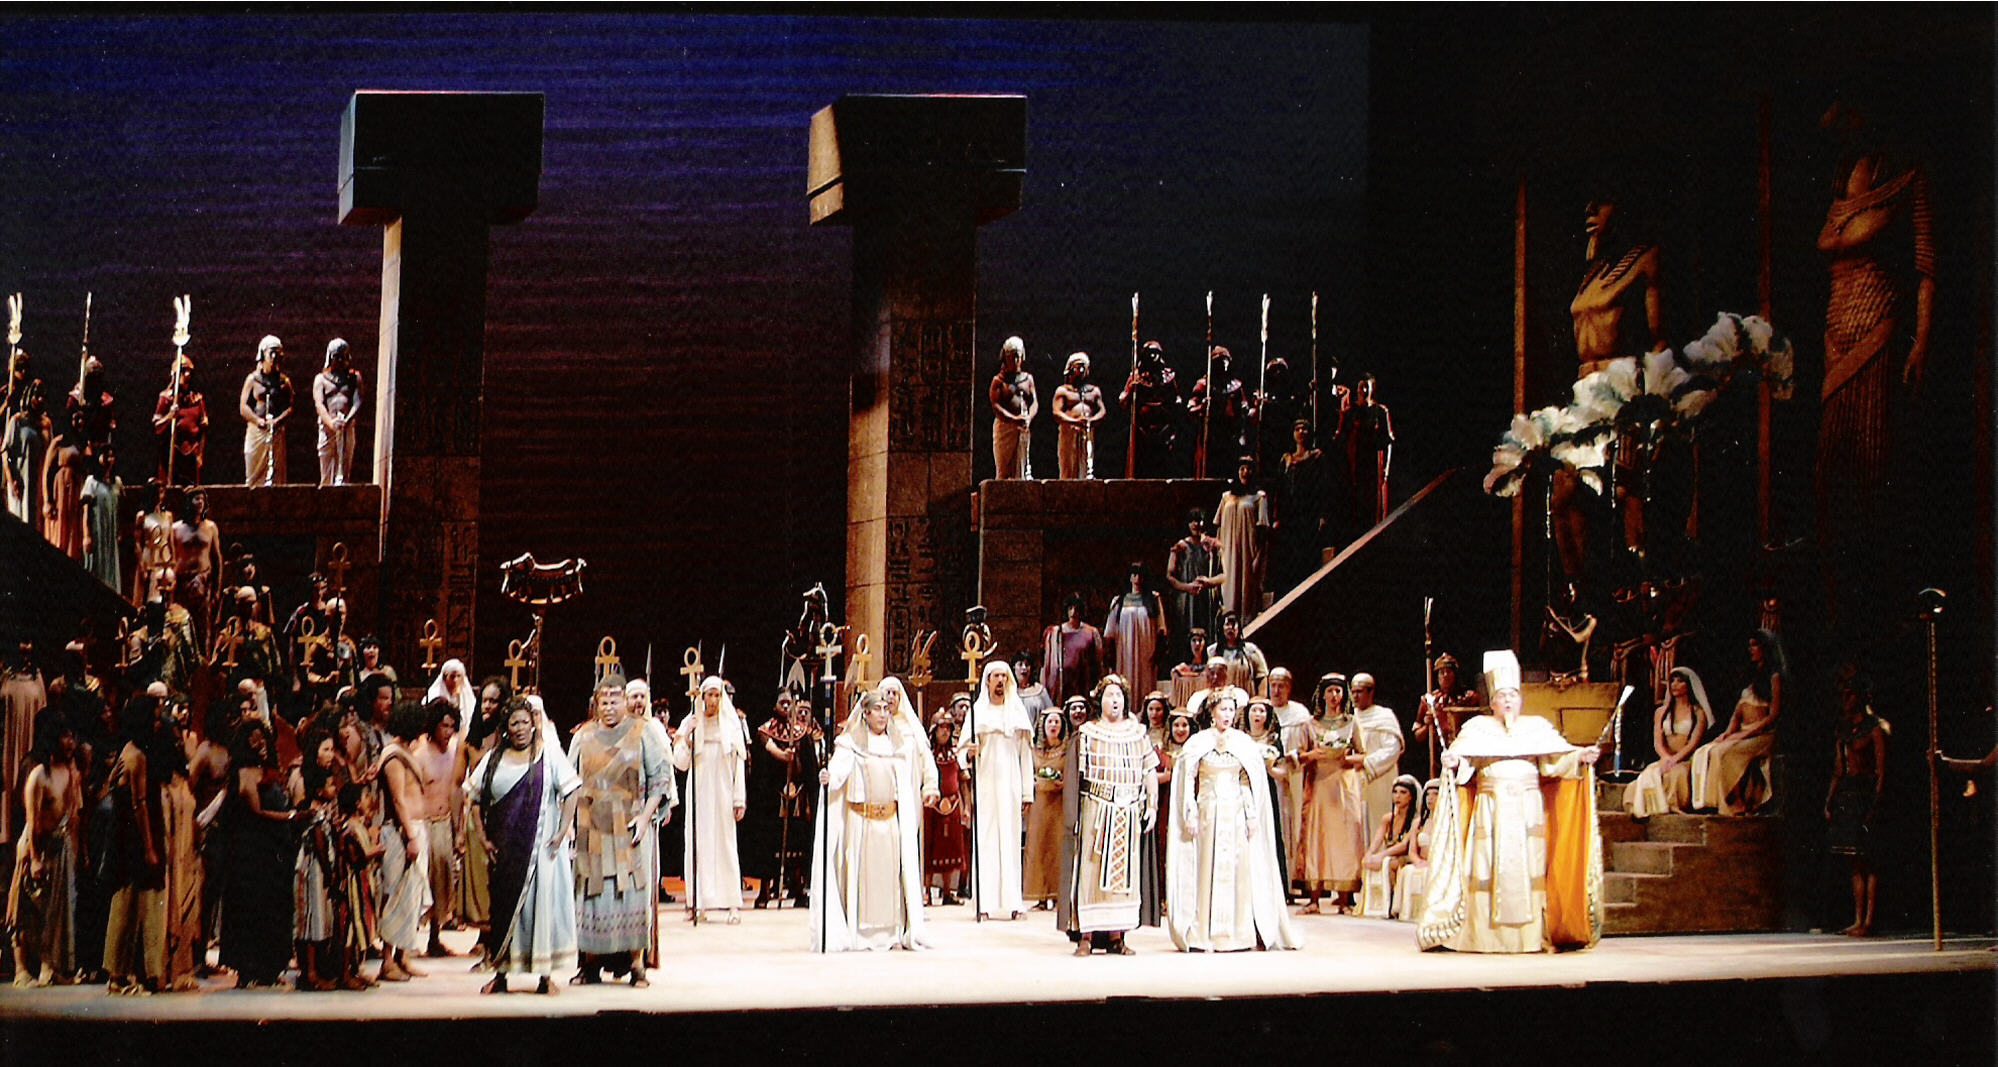 مشهد النصر من إنتاج "أوبرا باسيفيك" لأوبرا عايدة عام 2006. ‏ The "triumphal scene" from Opera Pacific's production of Aida in 2006. Foto wikimedia Mr Snrub • CC-BY-SA-3.0 